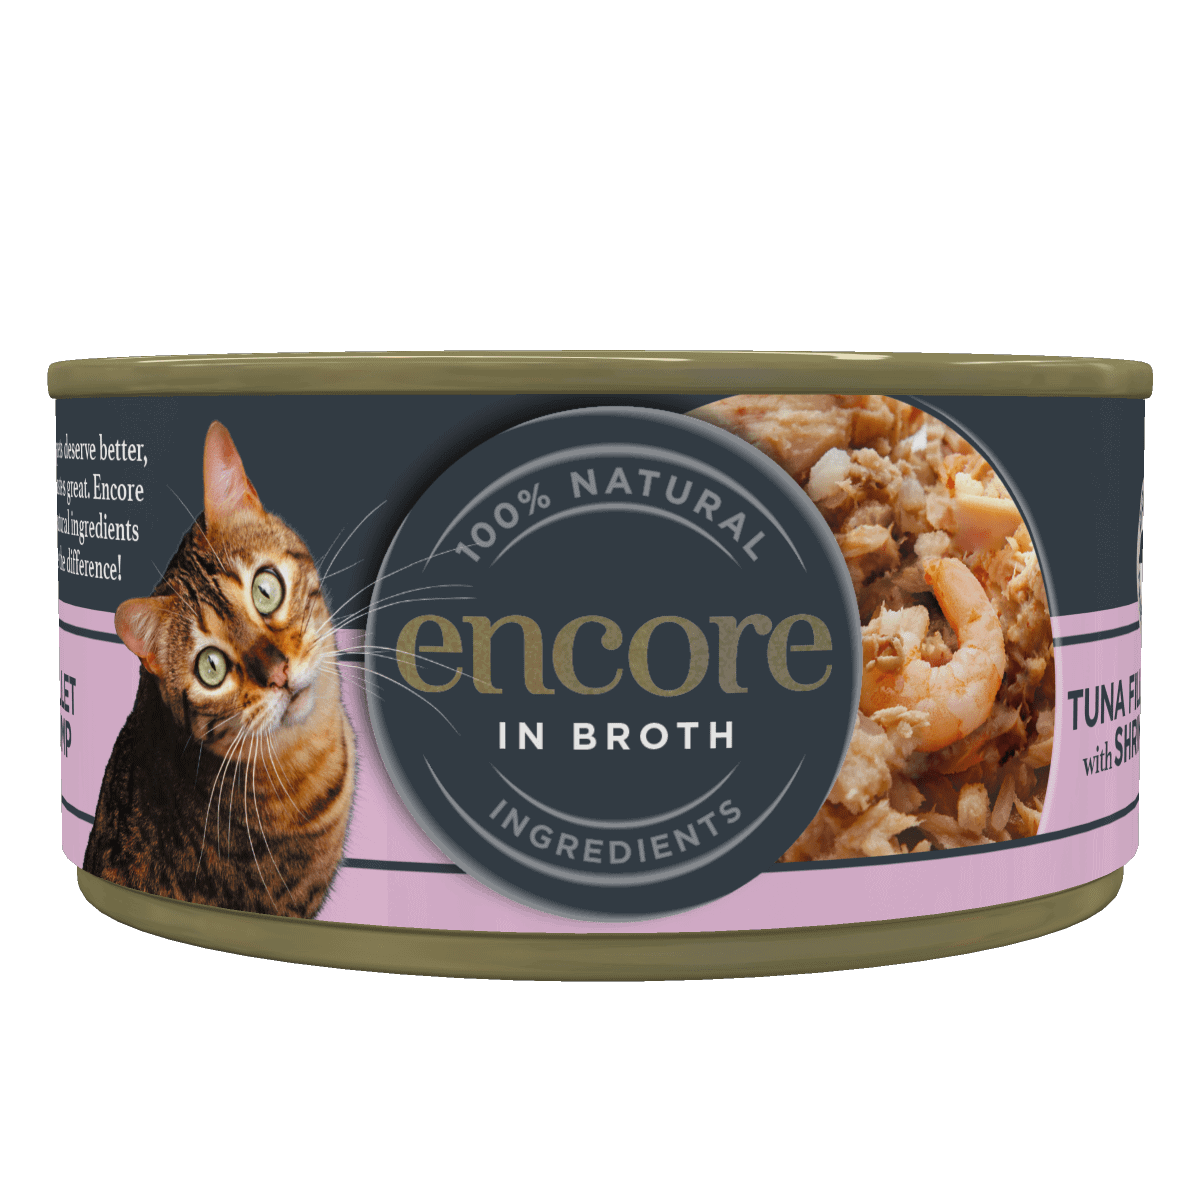 Encore 70g Tuna with Shrimp tin